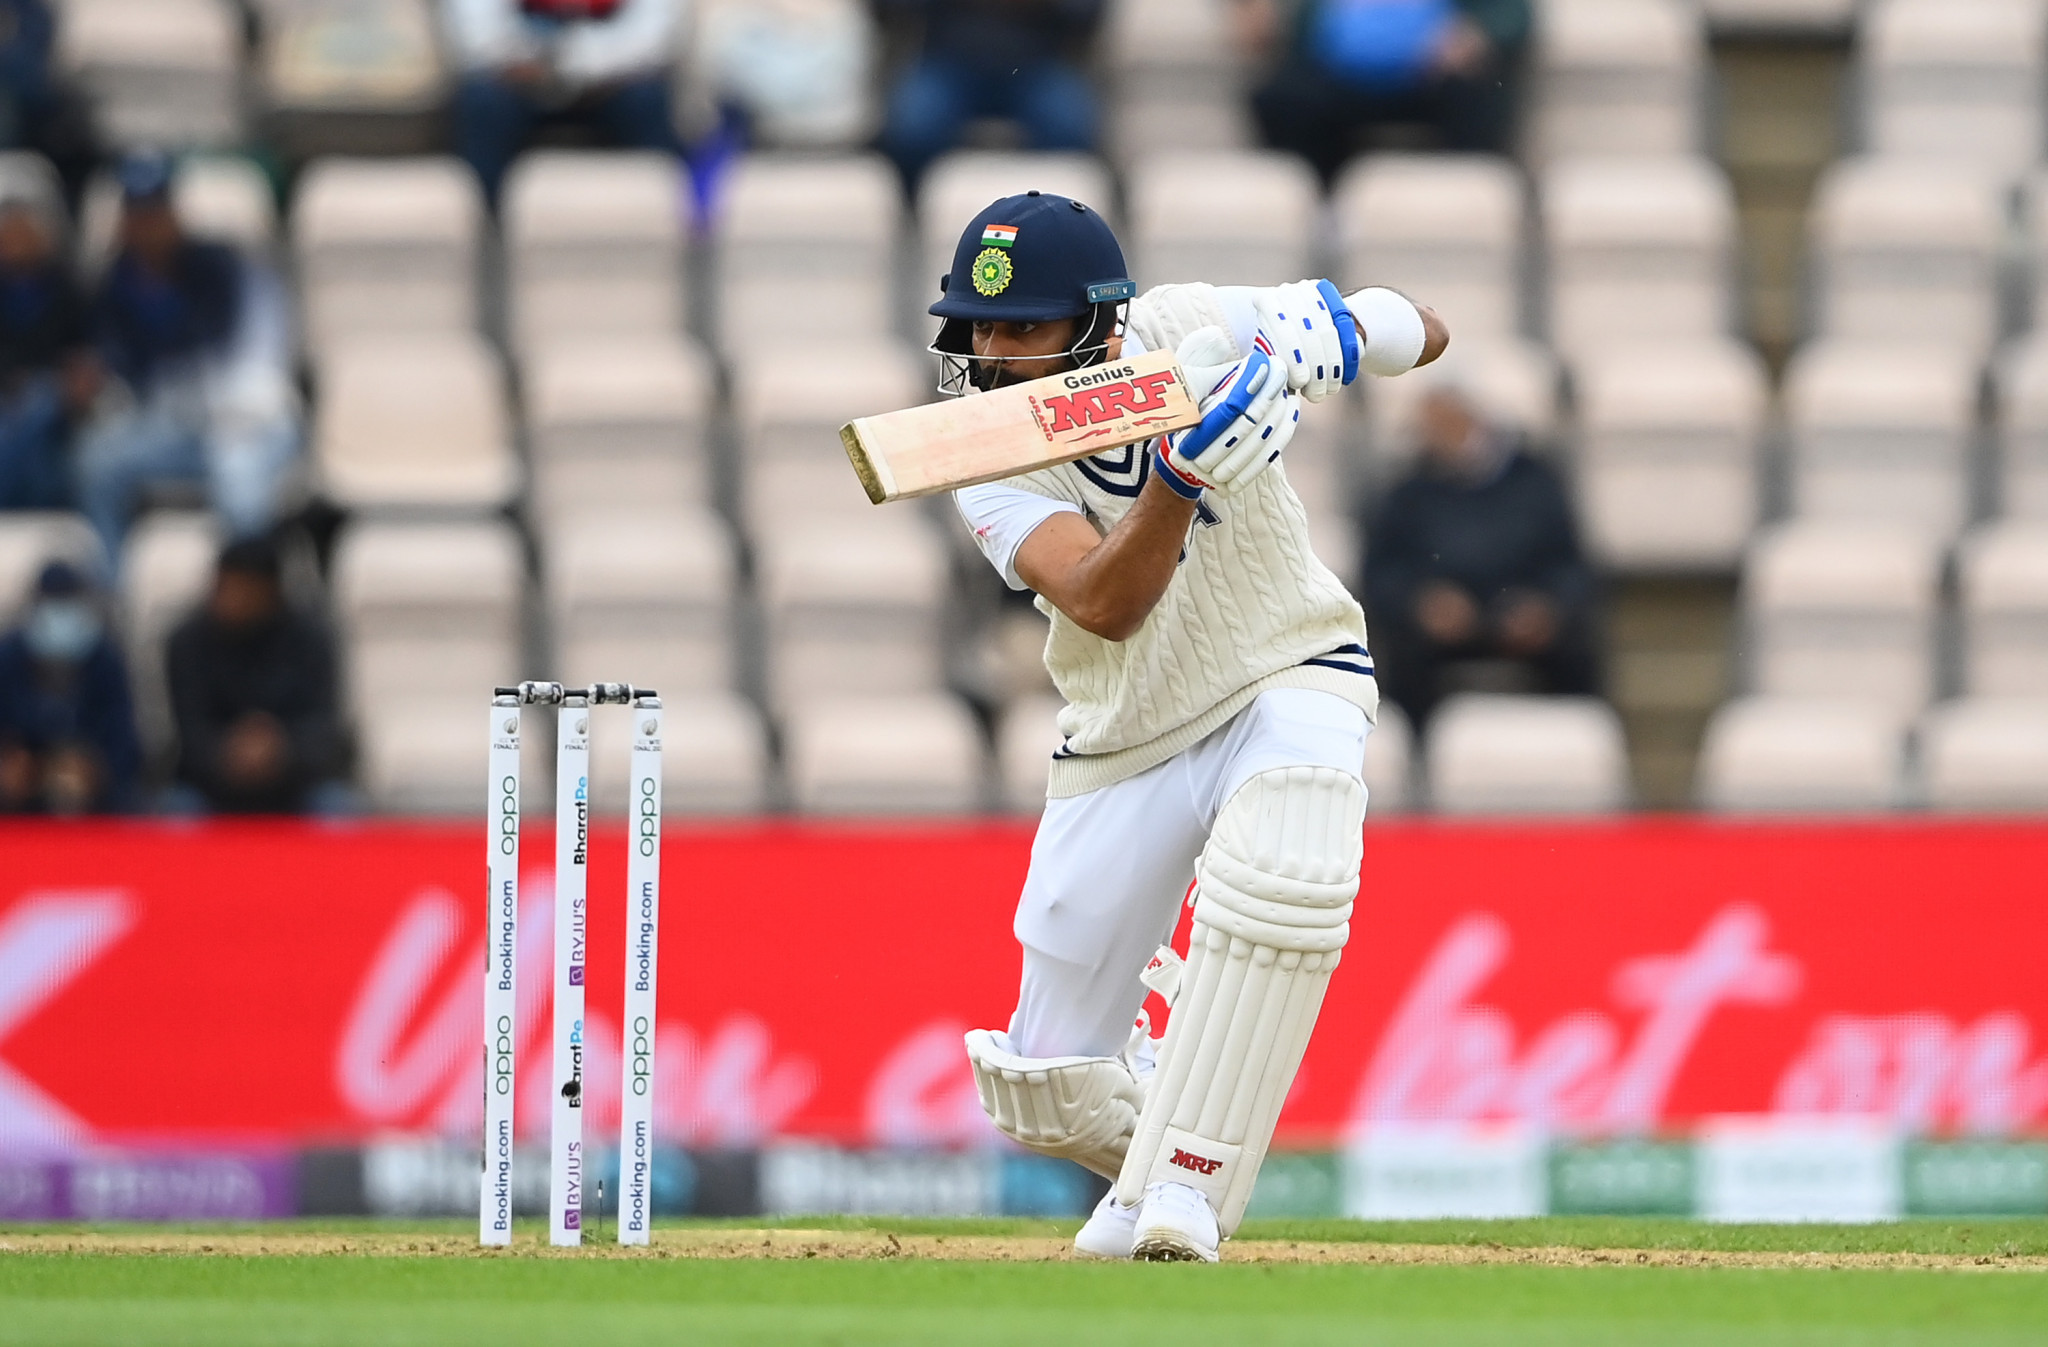 Virat Kohli ended day two unbeaten on 44 runs ©Getty Images